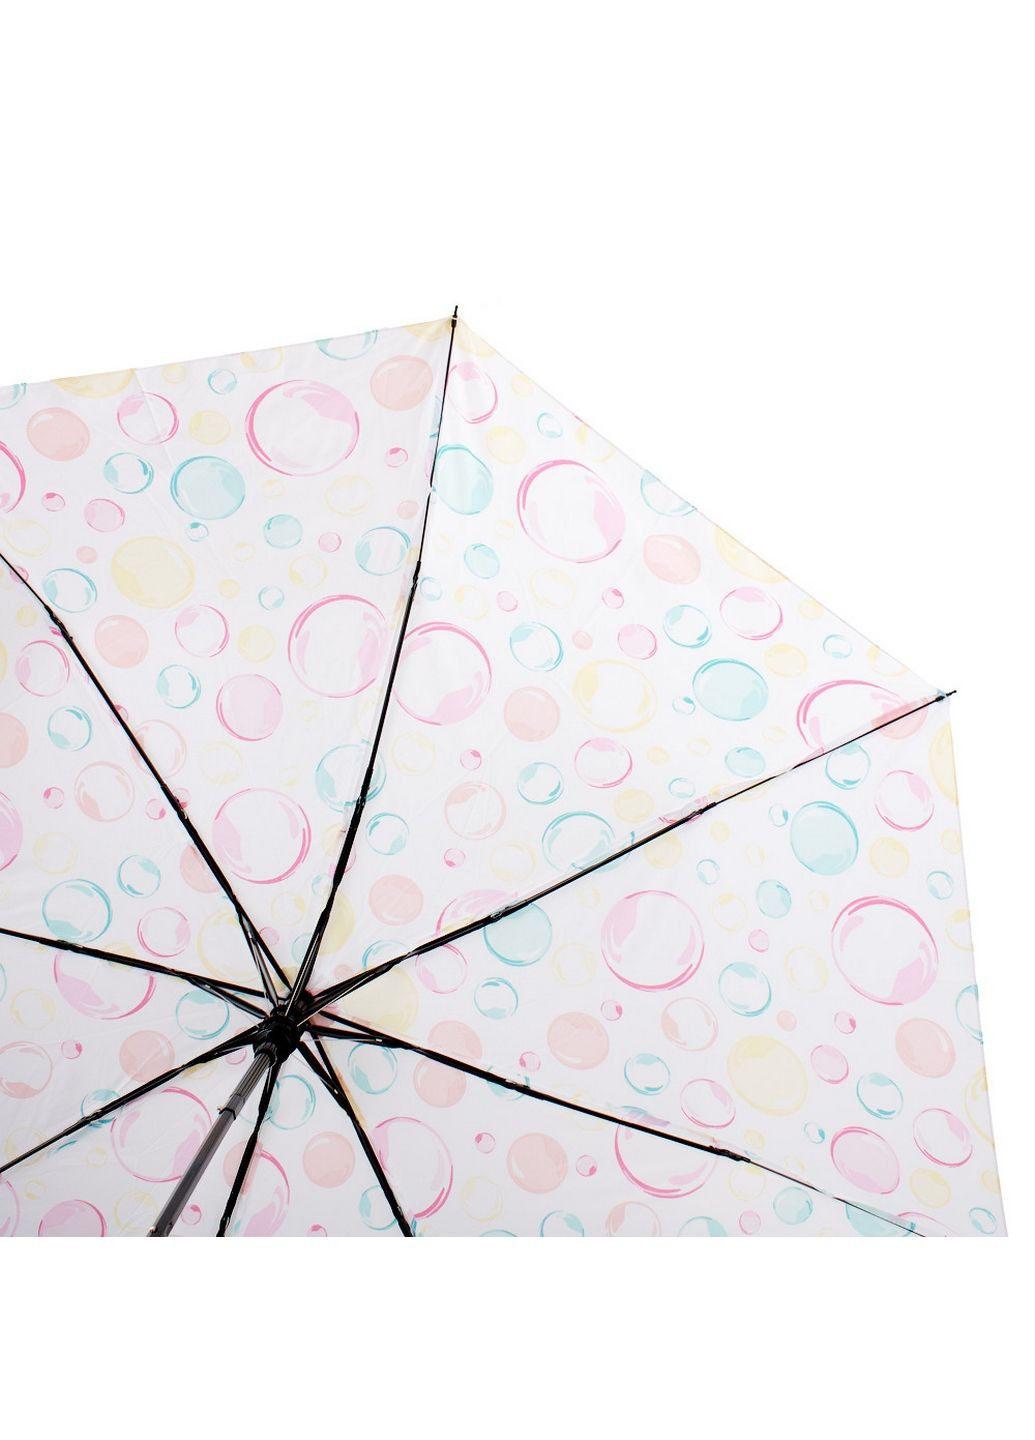 Жіноча складна парасолька Happy Rain (288132618)